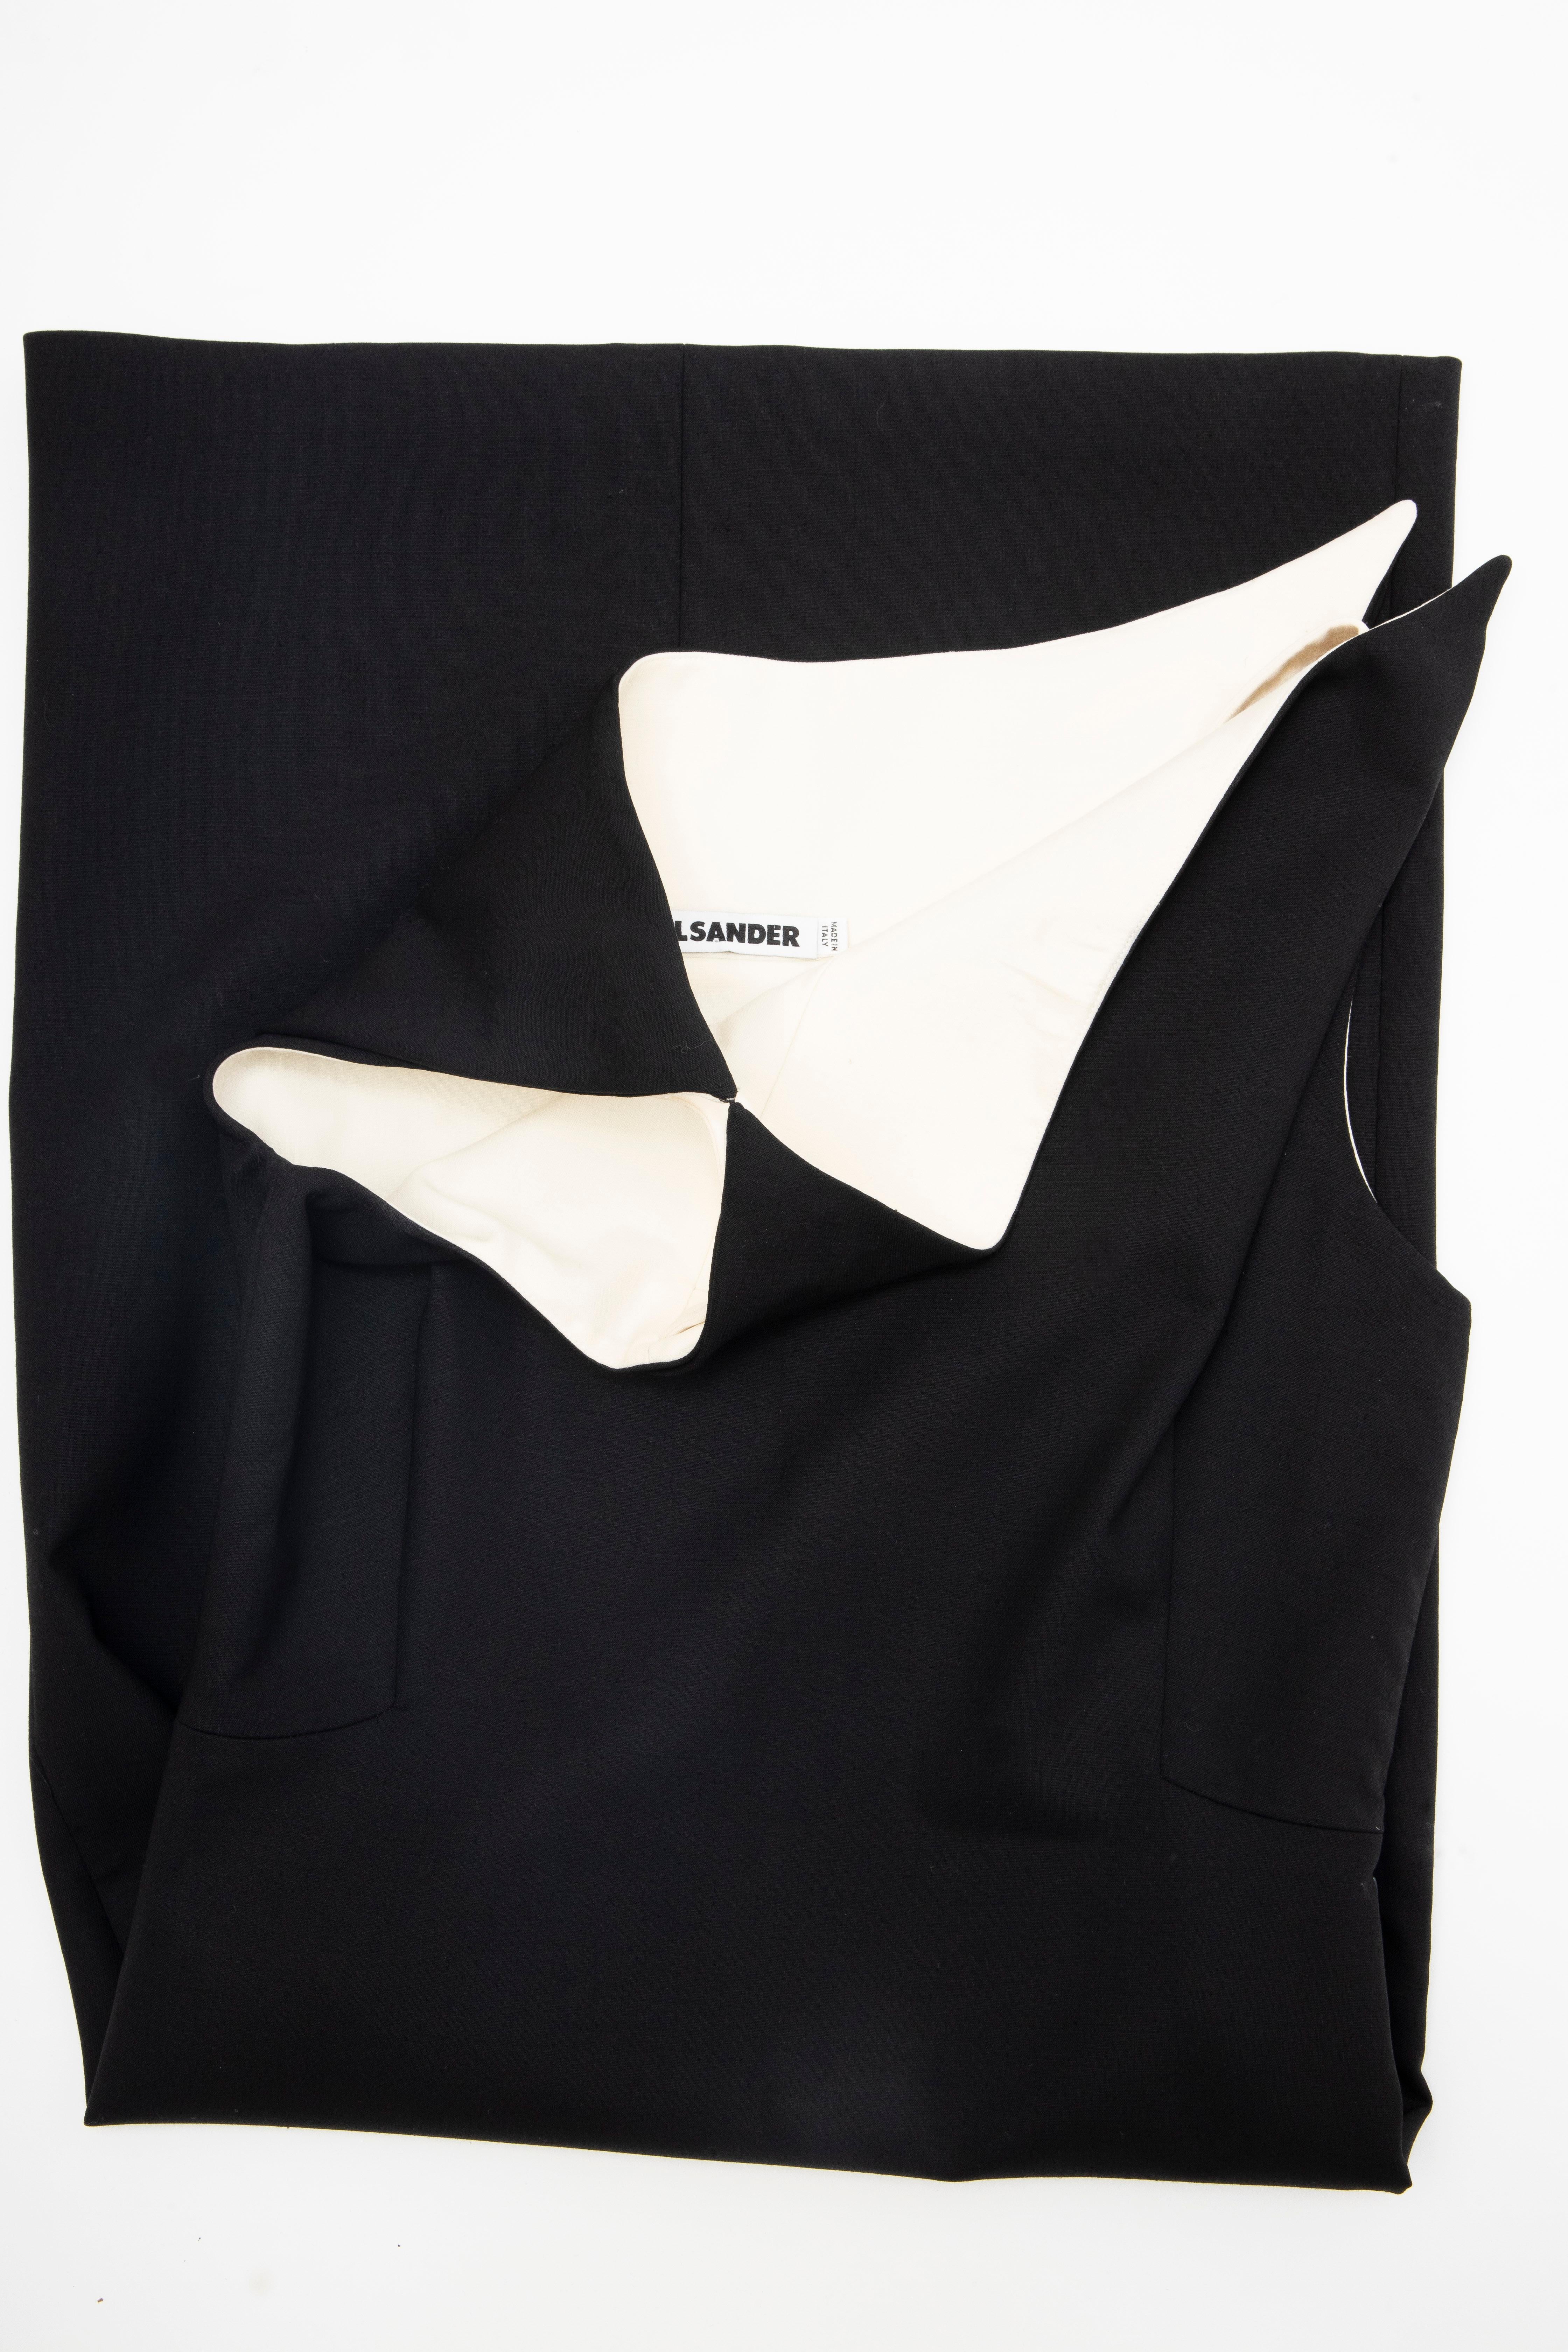 Raf Simons for Jil Sander Runway Black Wool Sculptural Evening Dress, Fall 2009 For Sale 7